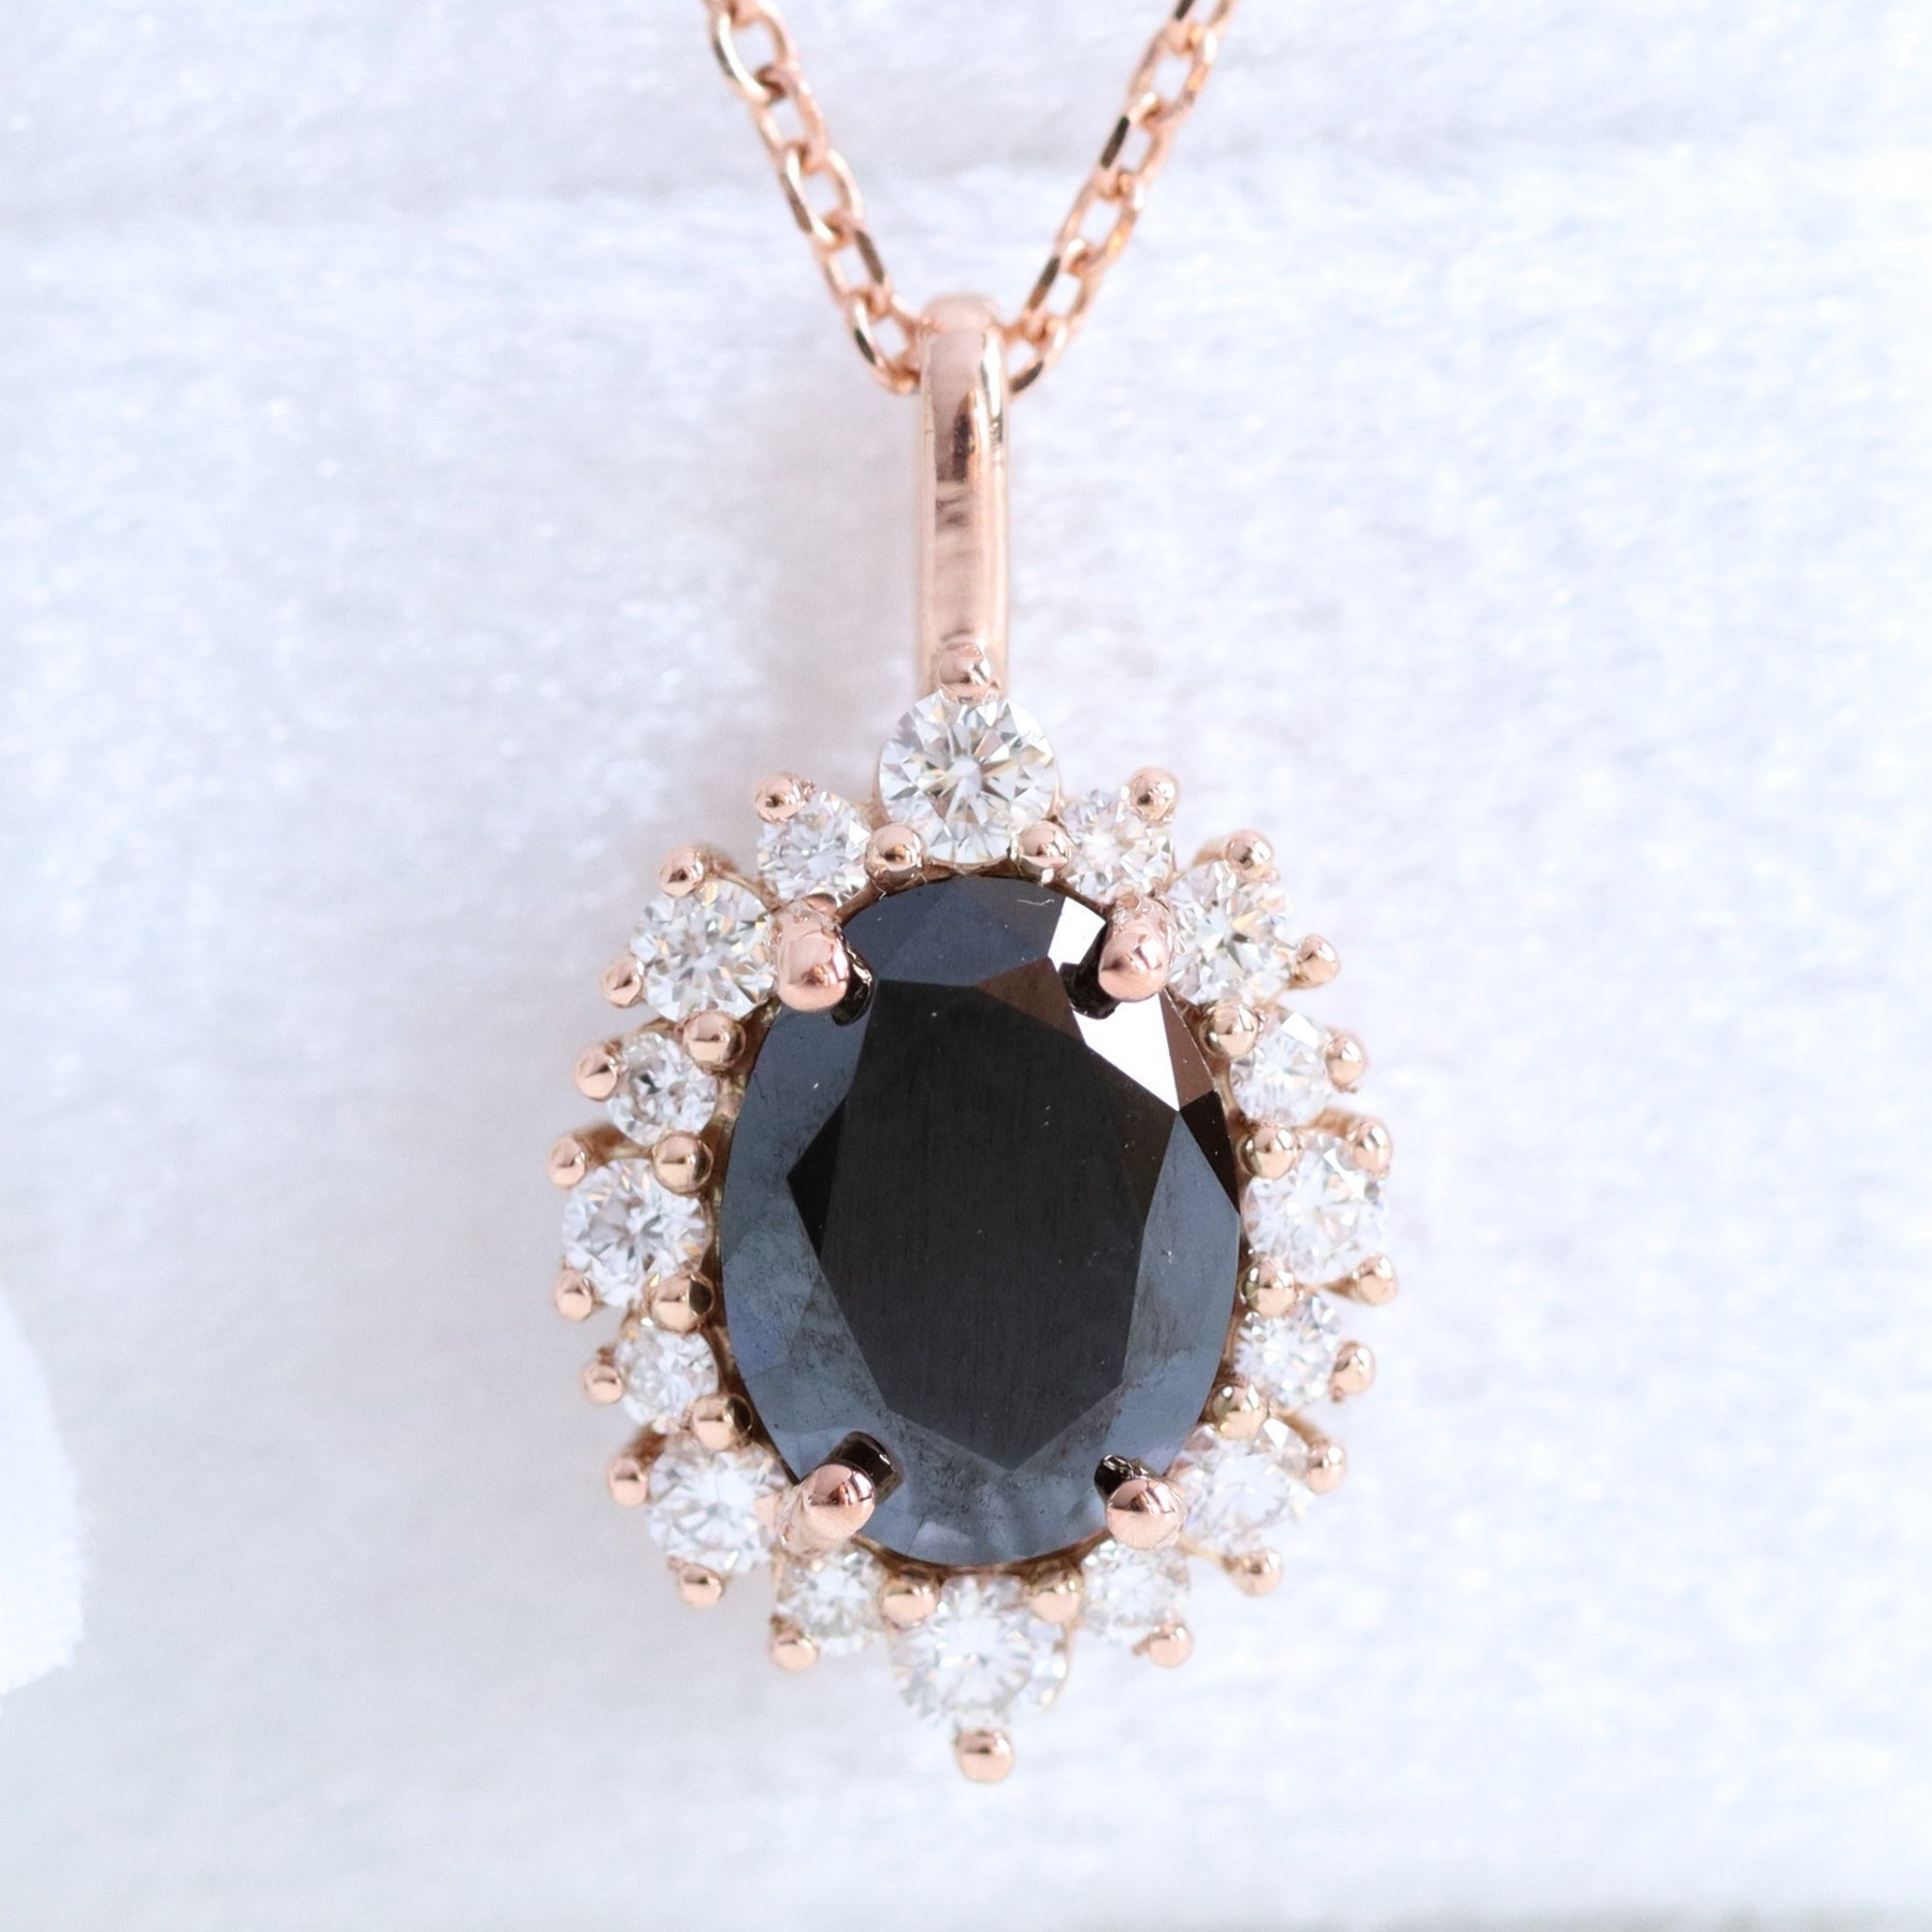 Oval black diamond necklace rose gold halo style black diamond drop pendant necklace la more design jewelry